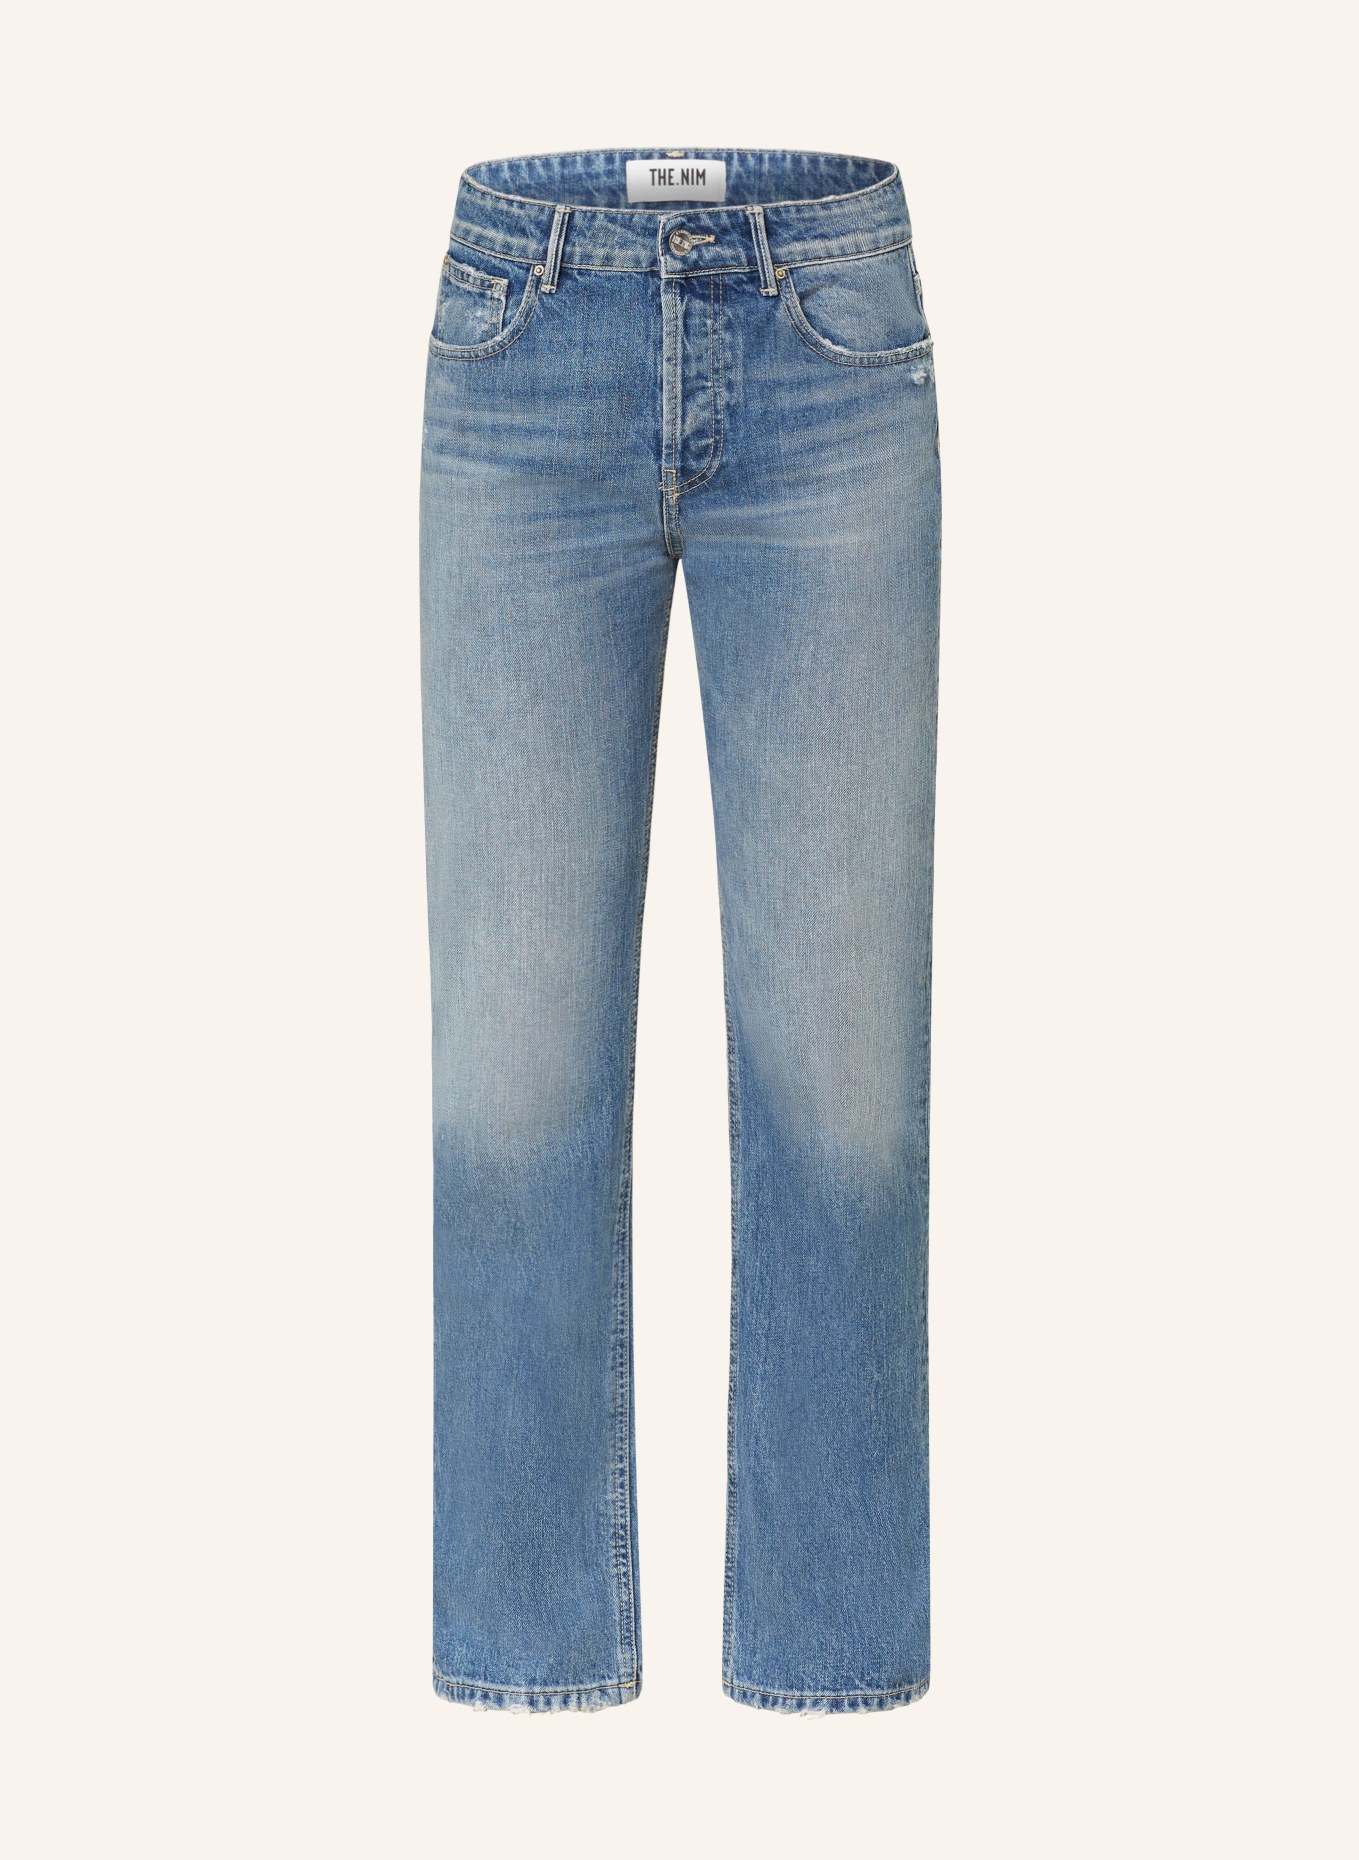 THE.NIM STANDARD Jeans JANE, Farbe: W855-MSW MID BLUE (Bild 1)